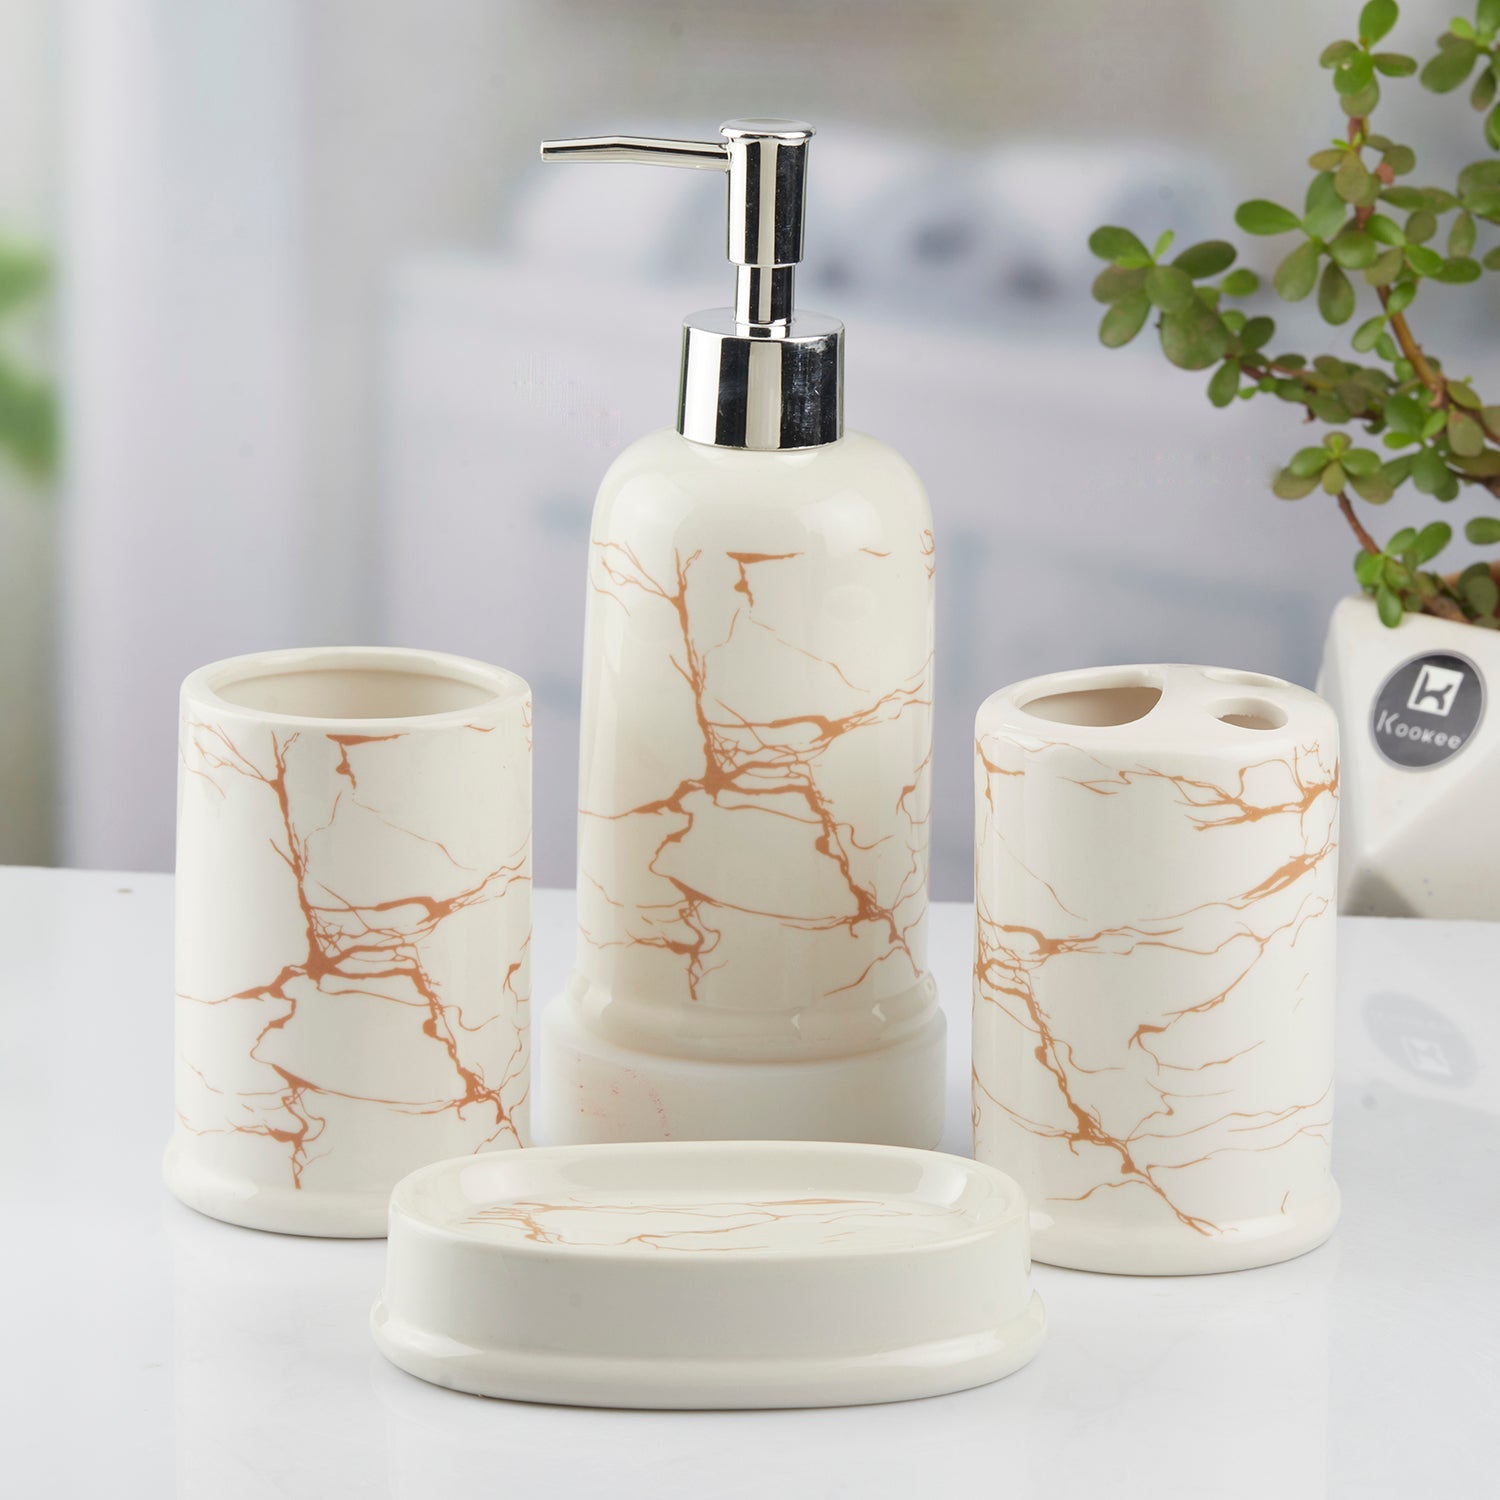 Ceramic Bathroom Set of 4 with Soap Dispenser (10392)